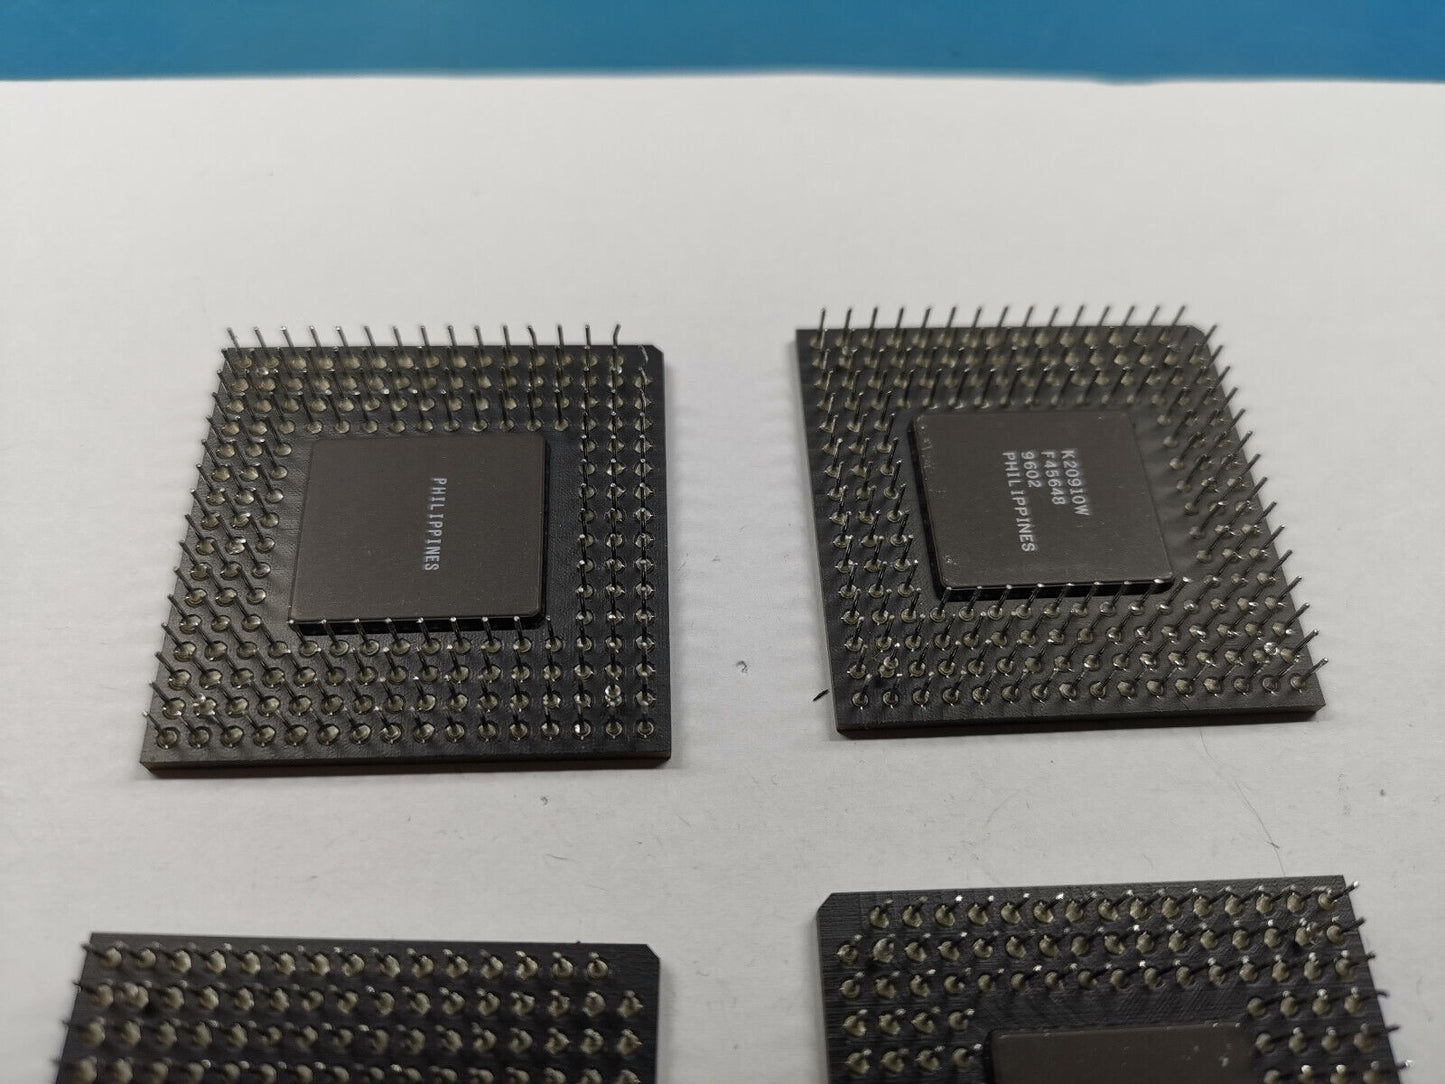 4 x Xilinx XC3090-100 And XC3090 FPGA